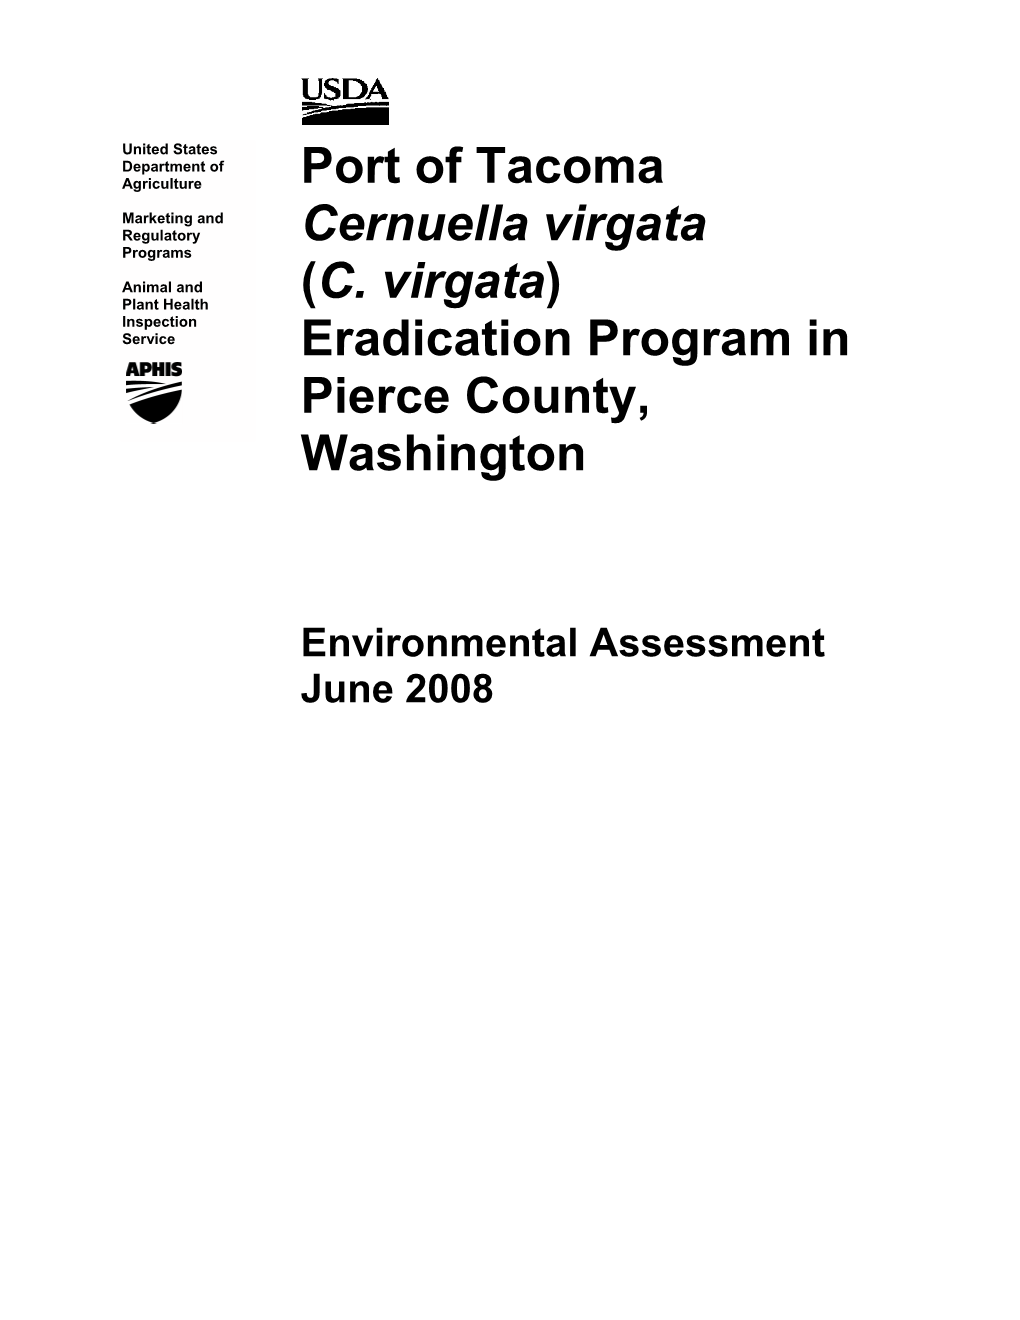 Port of Tacoma Cernuella Virgata (C